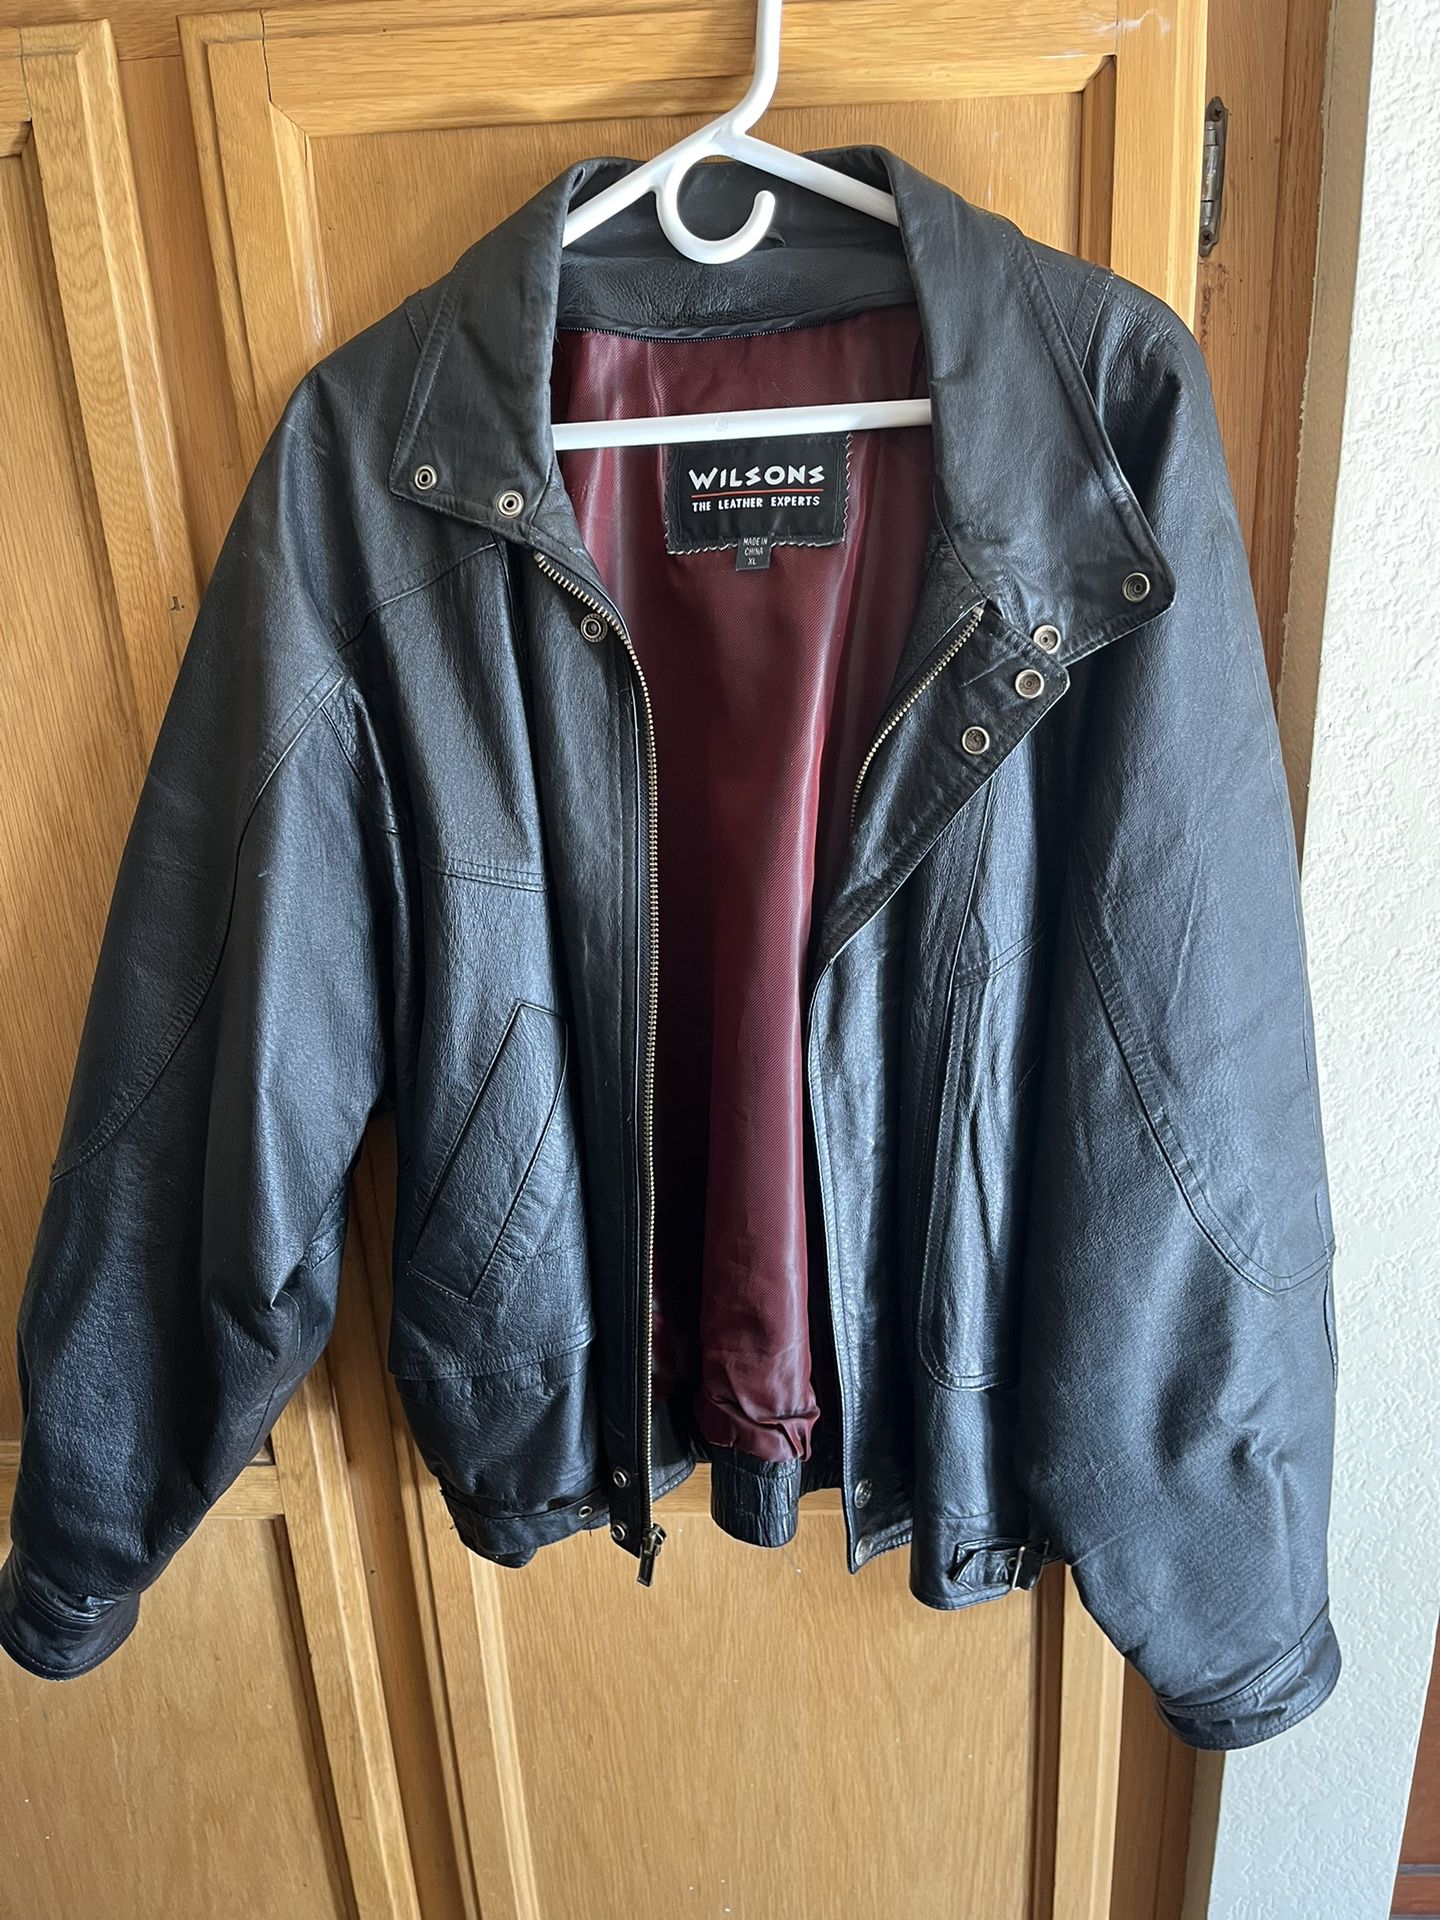 Wilson’s Men’s Leather Jacket XL